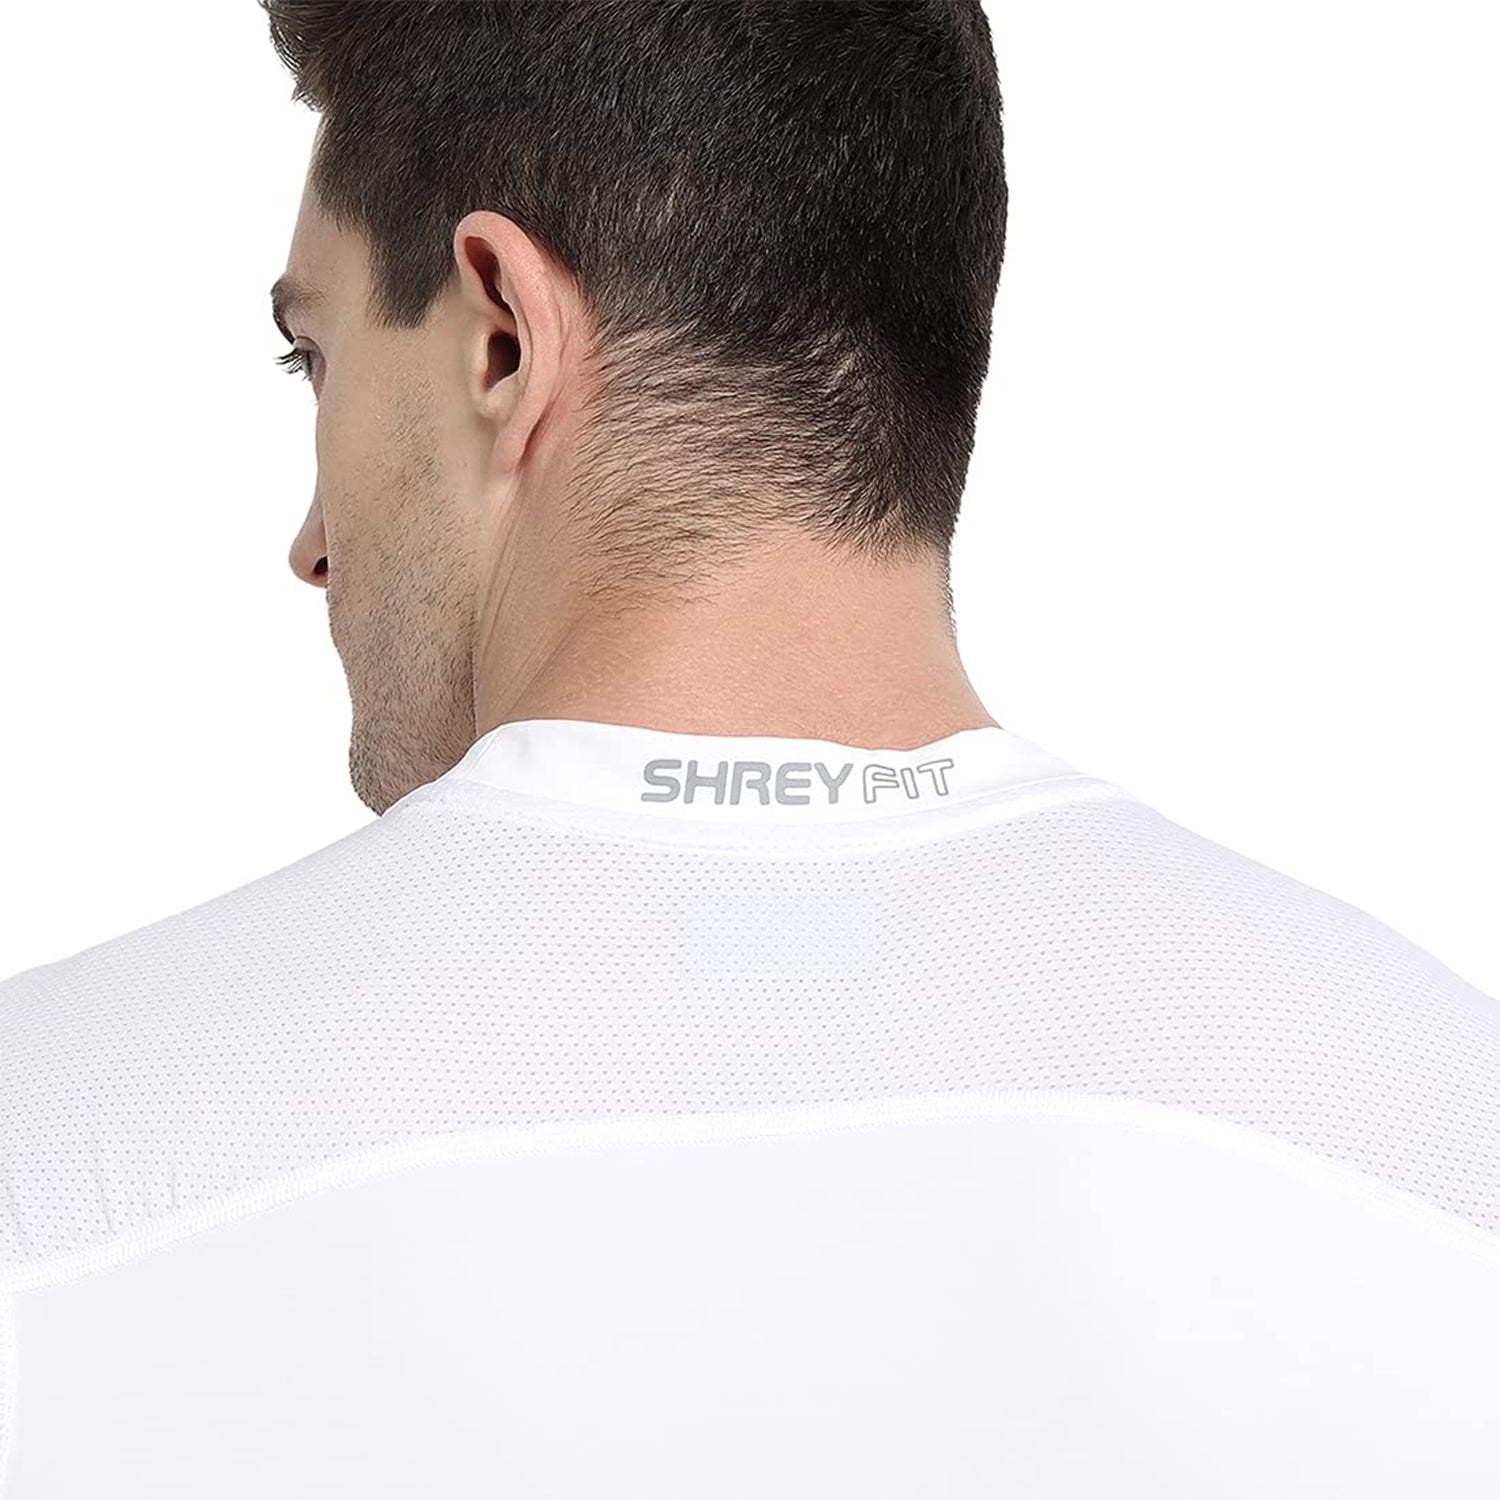 Shrey 1757 Intense Compression Short Sleeve Top - Best Price online Prokicksports.com